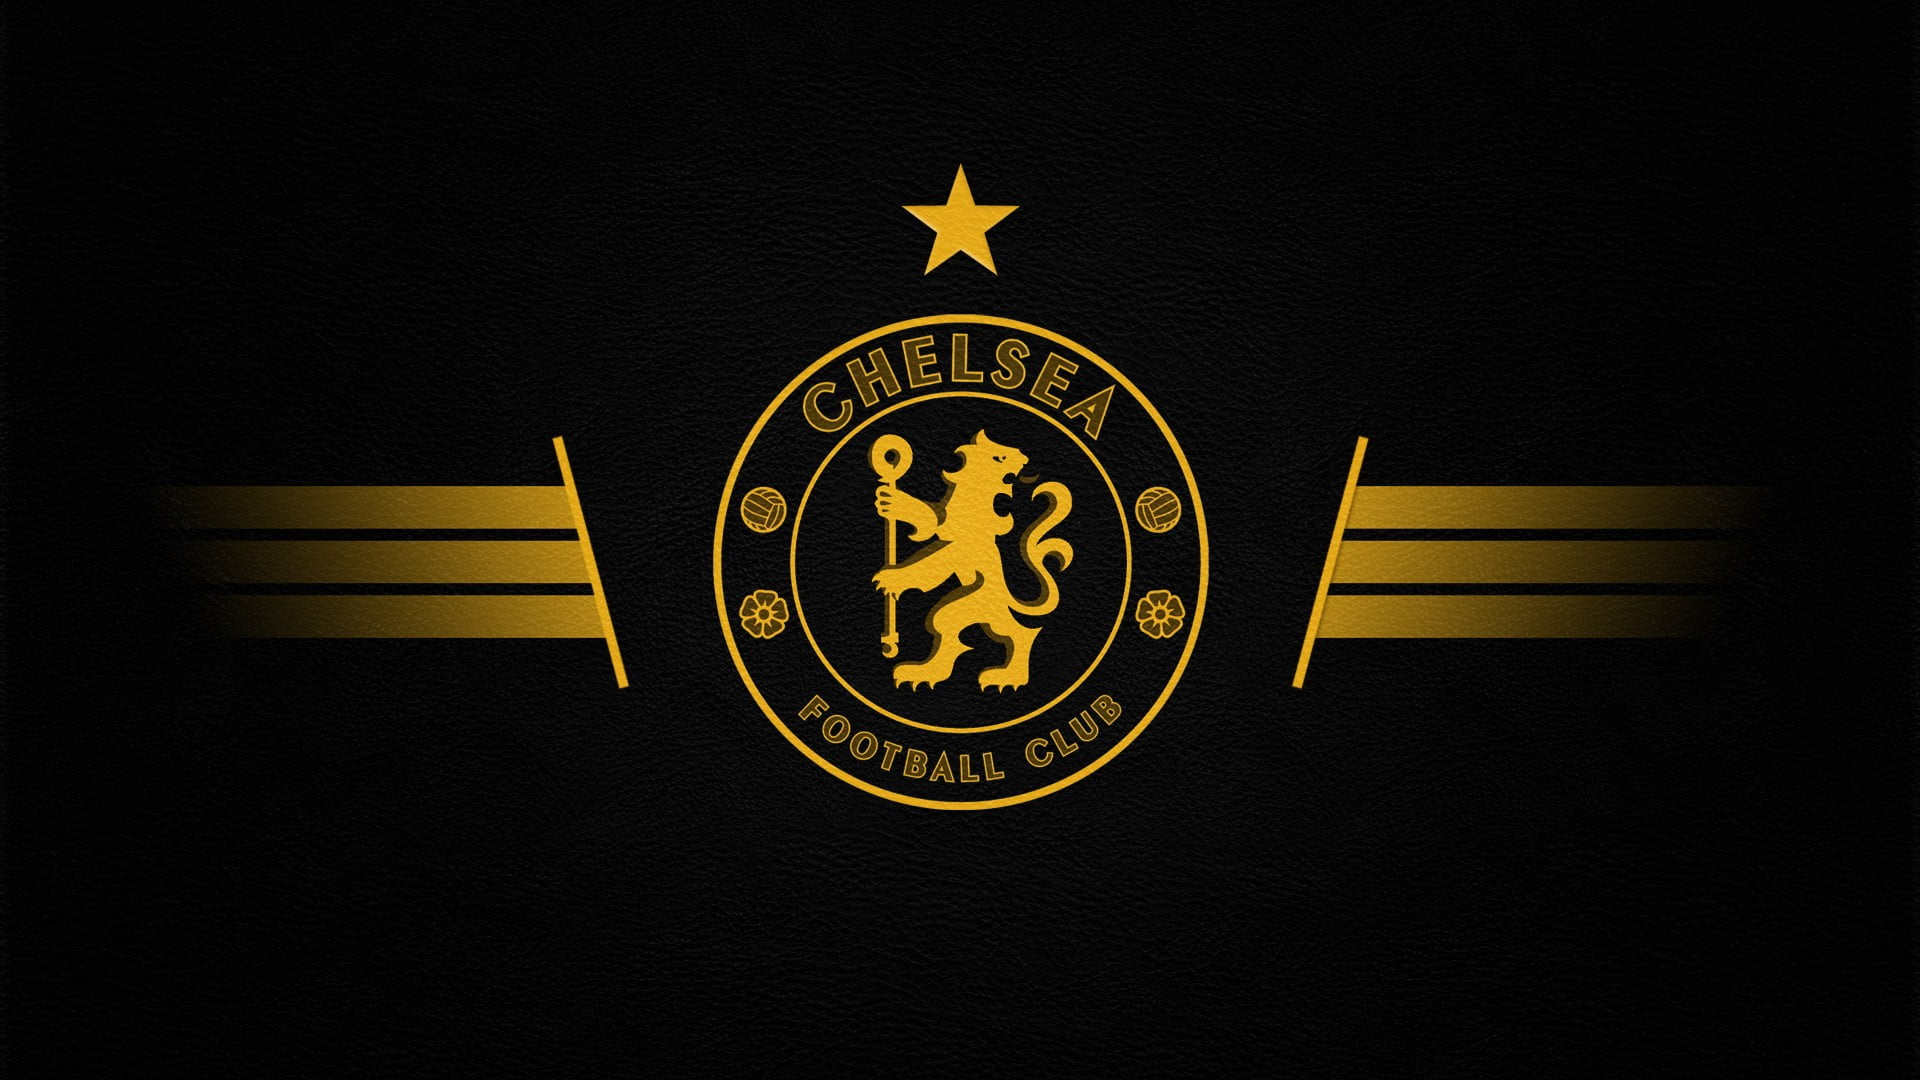 Chelsea Football Club logo, Chelsea FC, soccer, soccer clubs